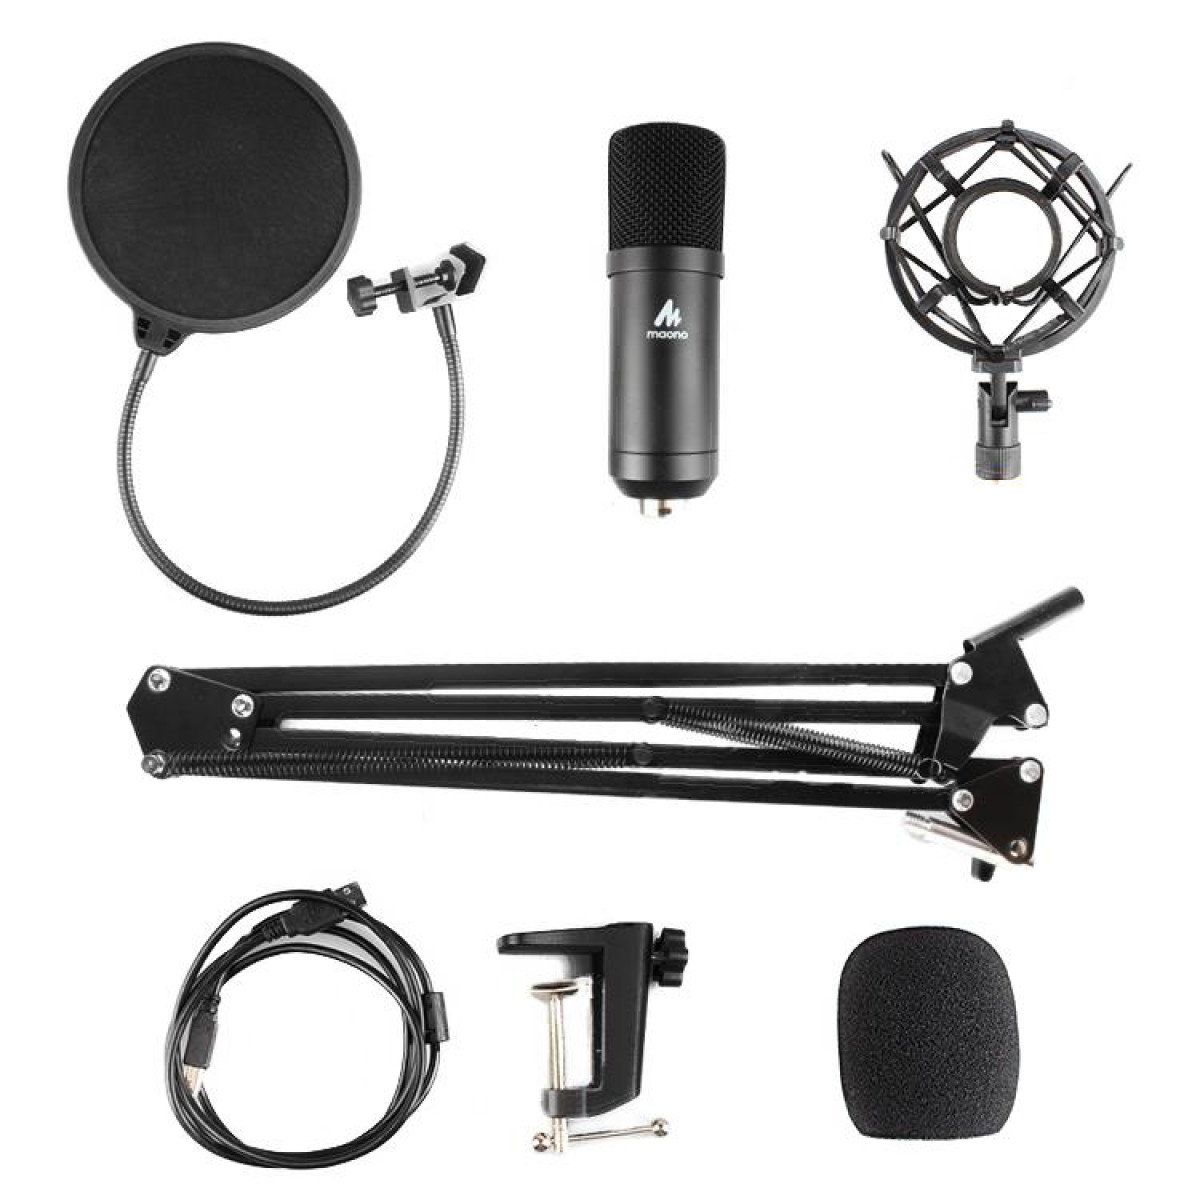 Arm mit MAONO Filter Mikrofon-Kit schwarz Halterung, MAONO USB-Podcasting-Mikrofon-Kit, Mikrofon,